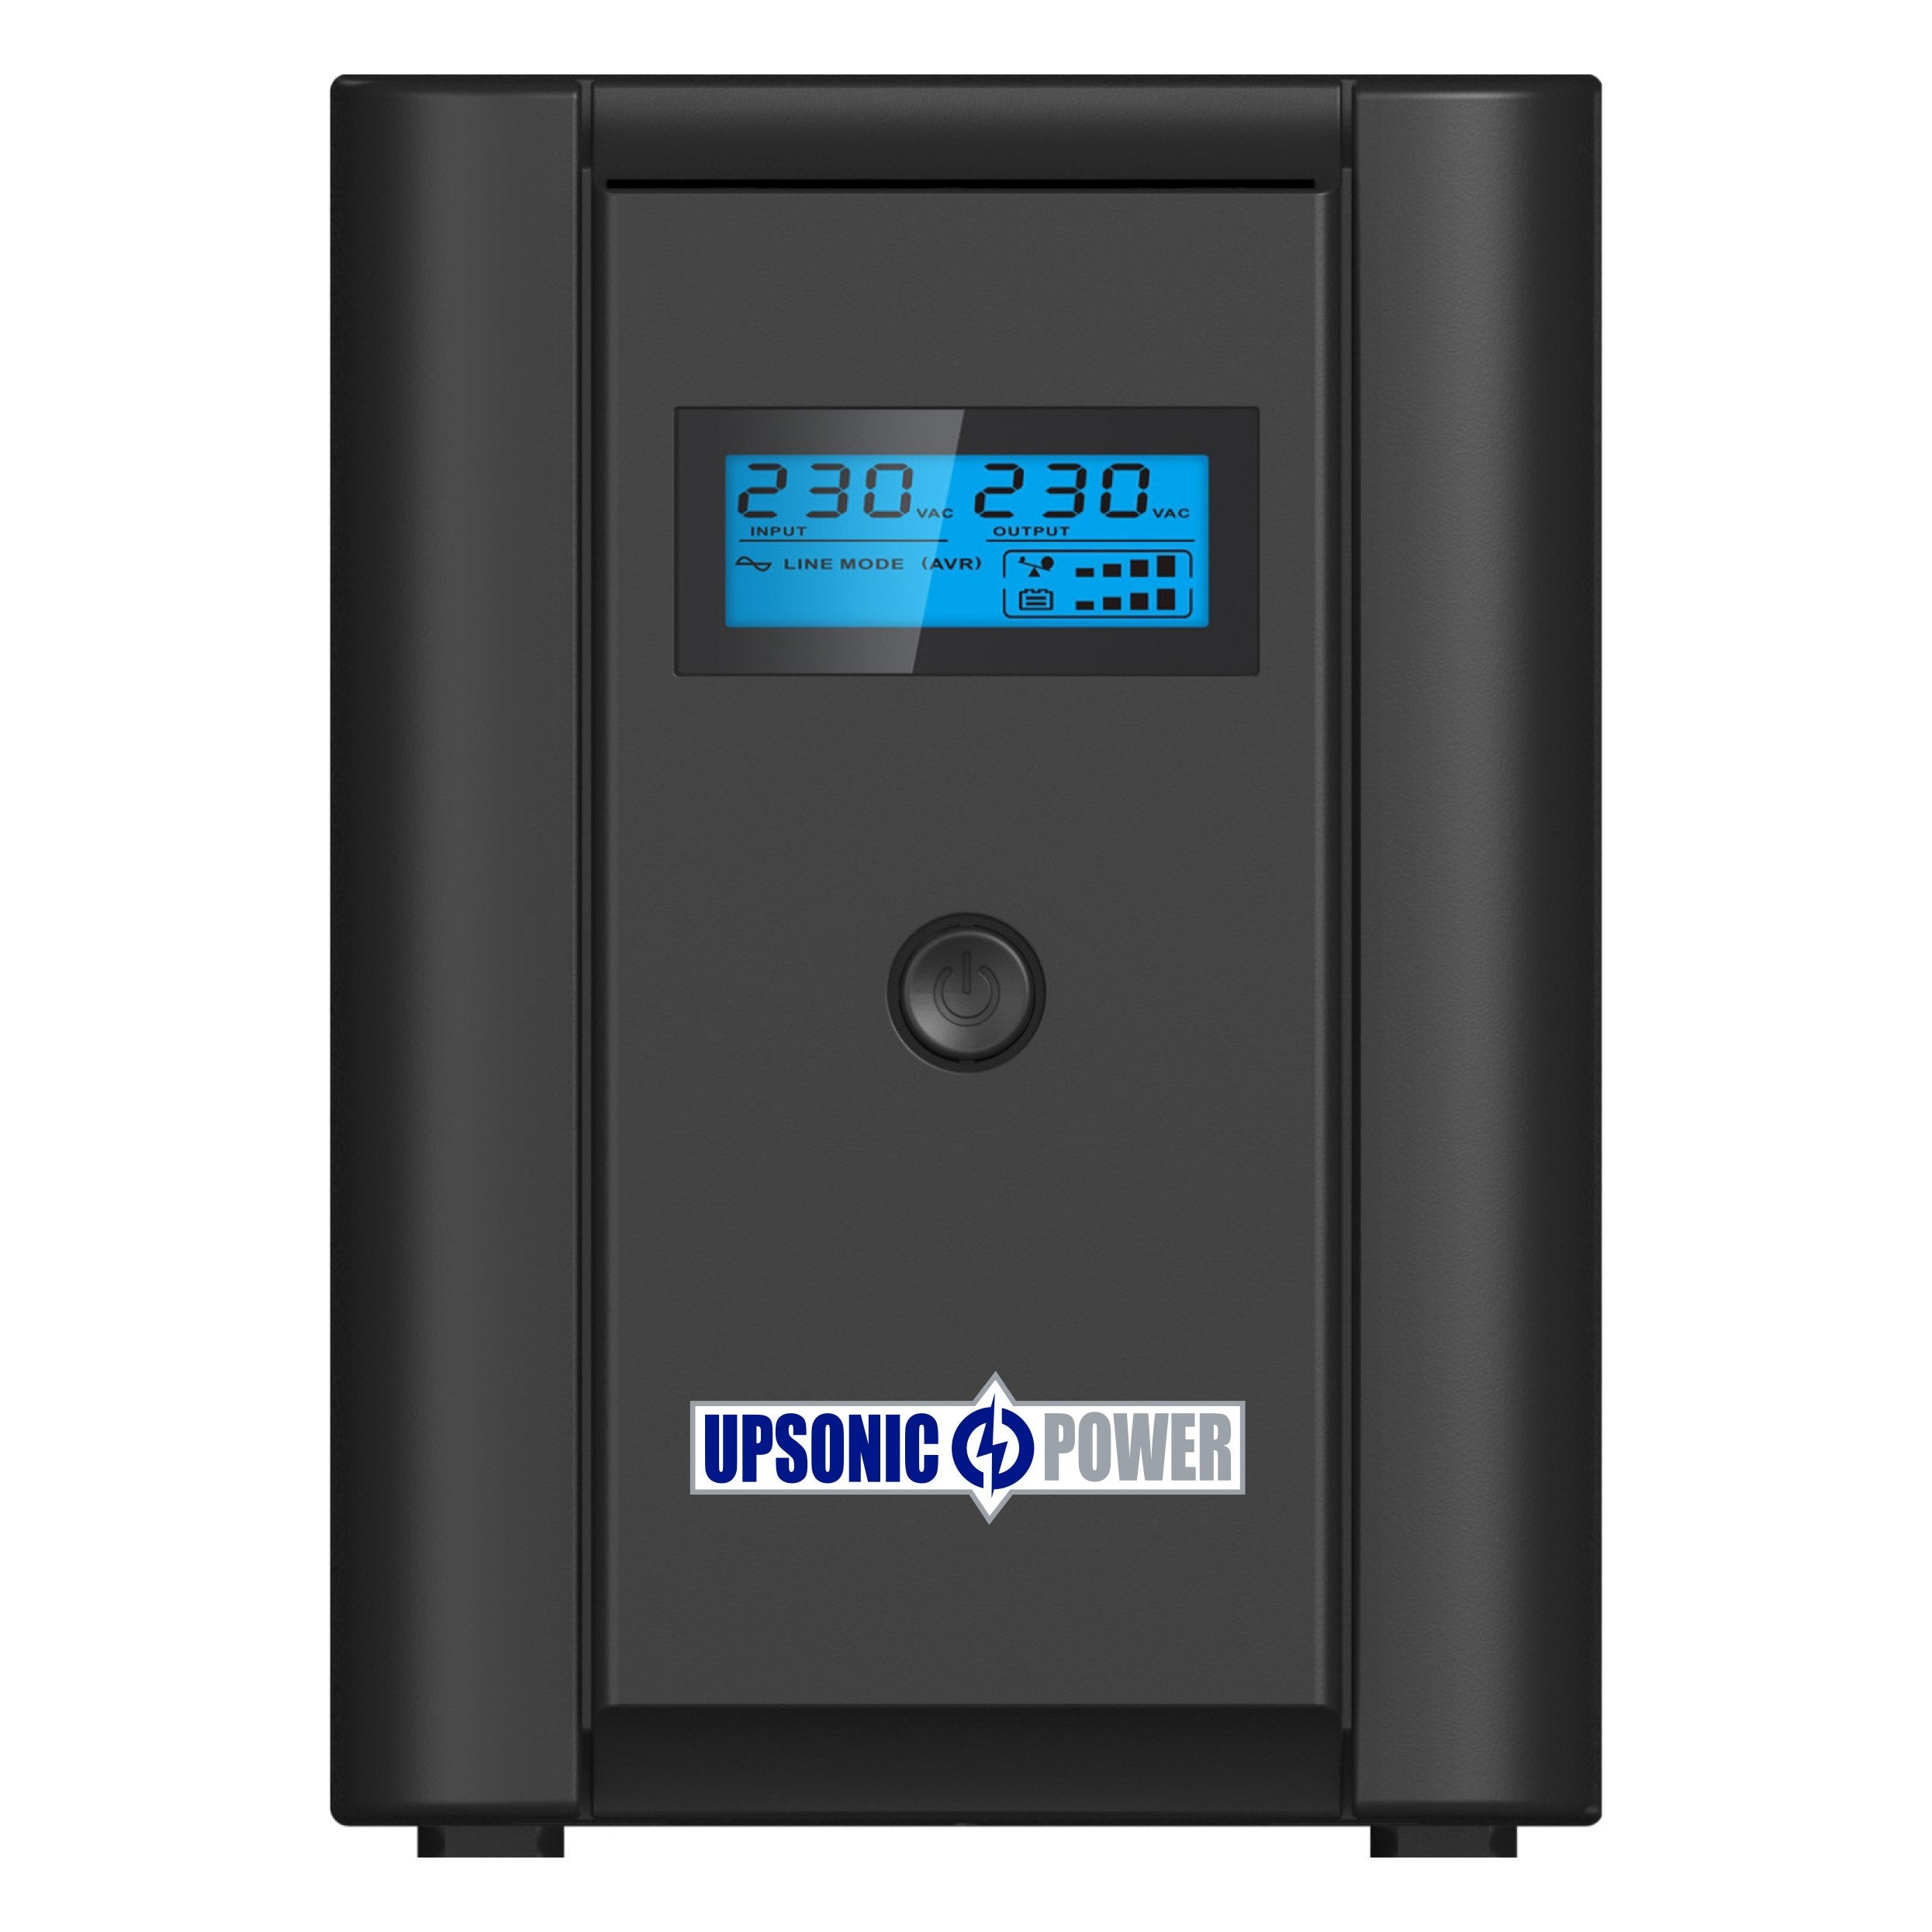 Upsonic DSV Series 1500VA UPS, LCD Display, Line Interactive, Tower, W139 x H195 x D364mm, 4 x AU Socket, USB Communications Port & Winpower Software